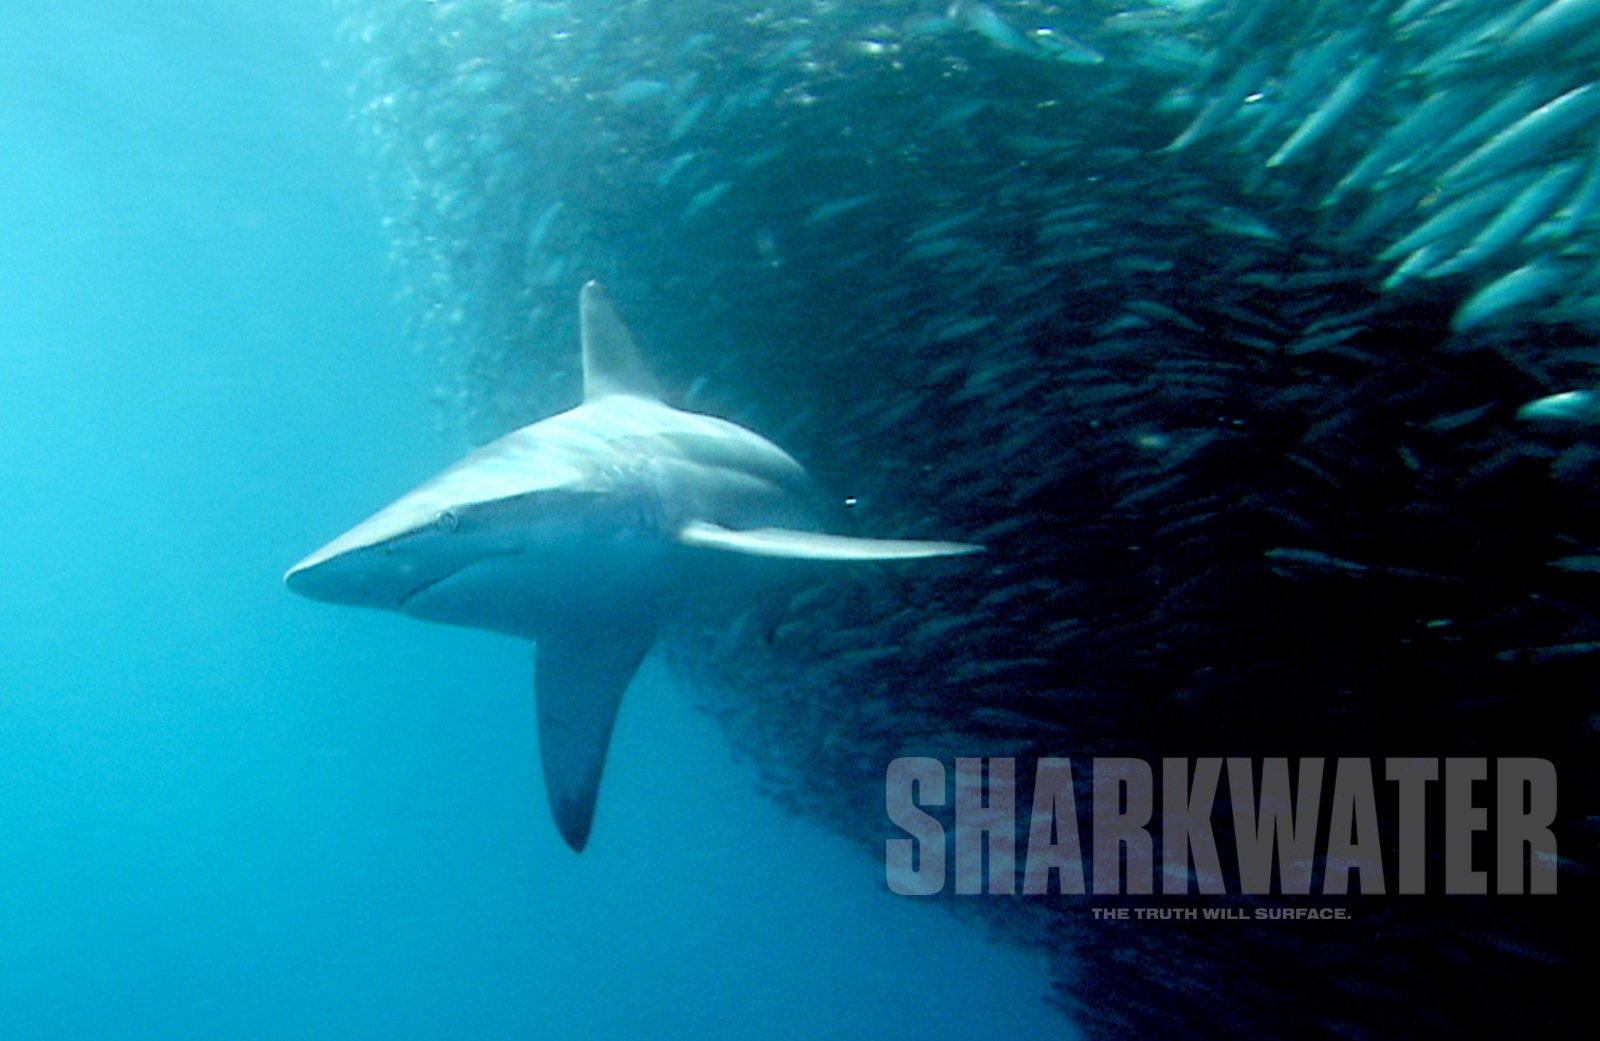 2017_02_06_Rob-Stewart_03 (c) Scene from the movie Sharkwater
(c) Rob Stewart / Sharkwater